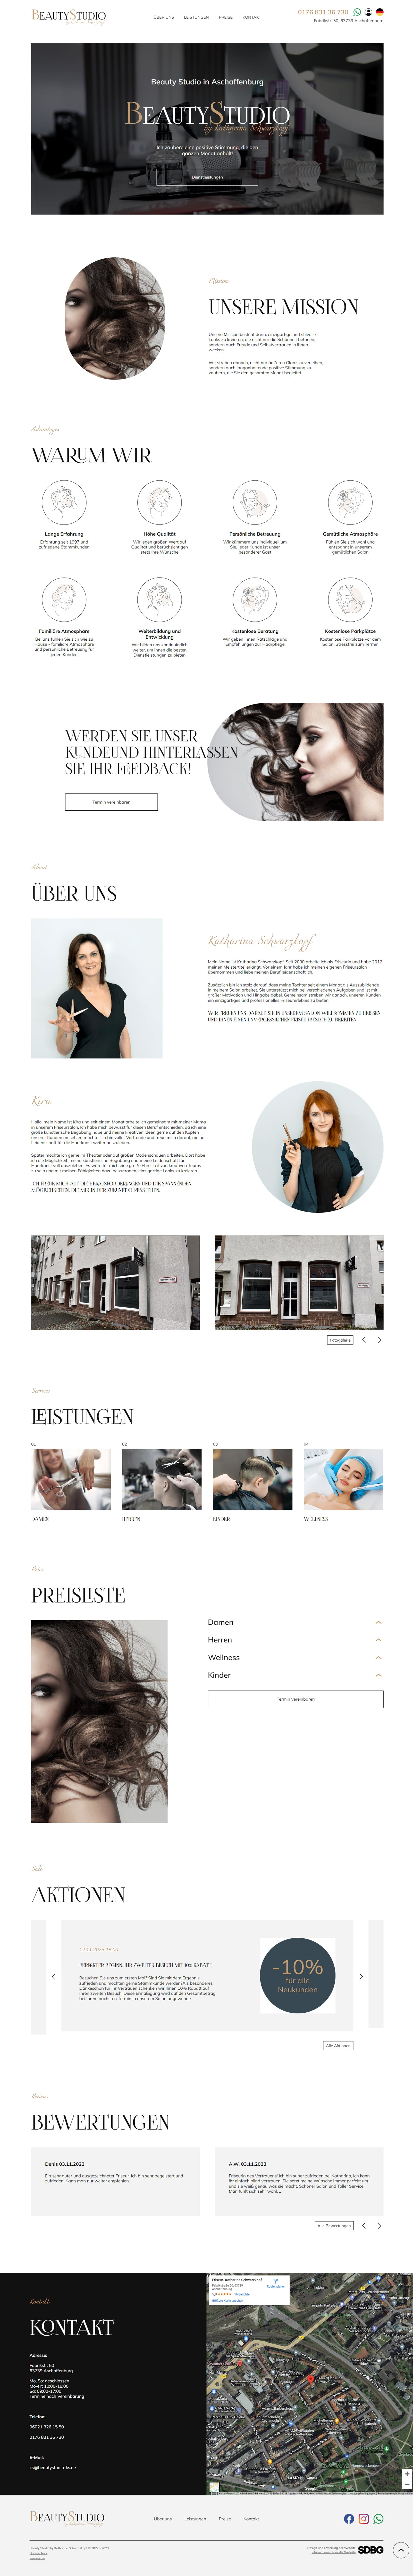 Разработка сайта салона красоты Beauty Studio by Katharina Schwarzkopf